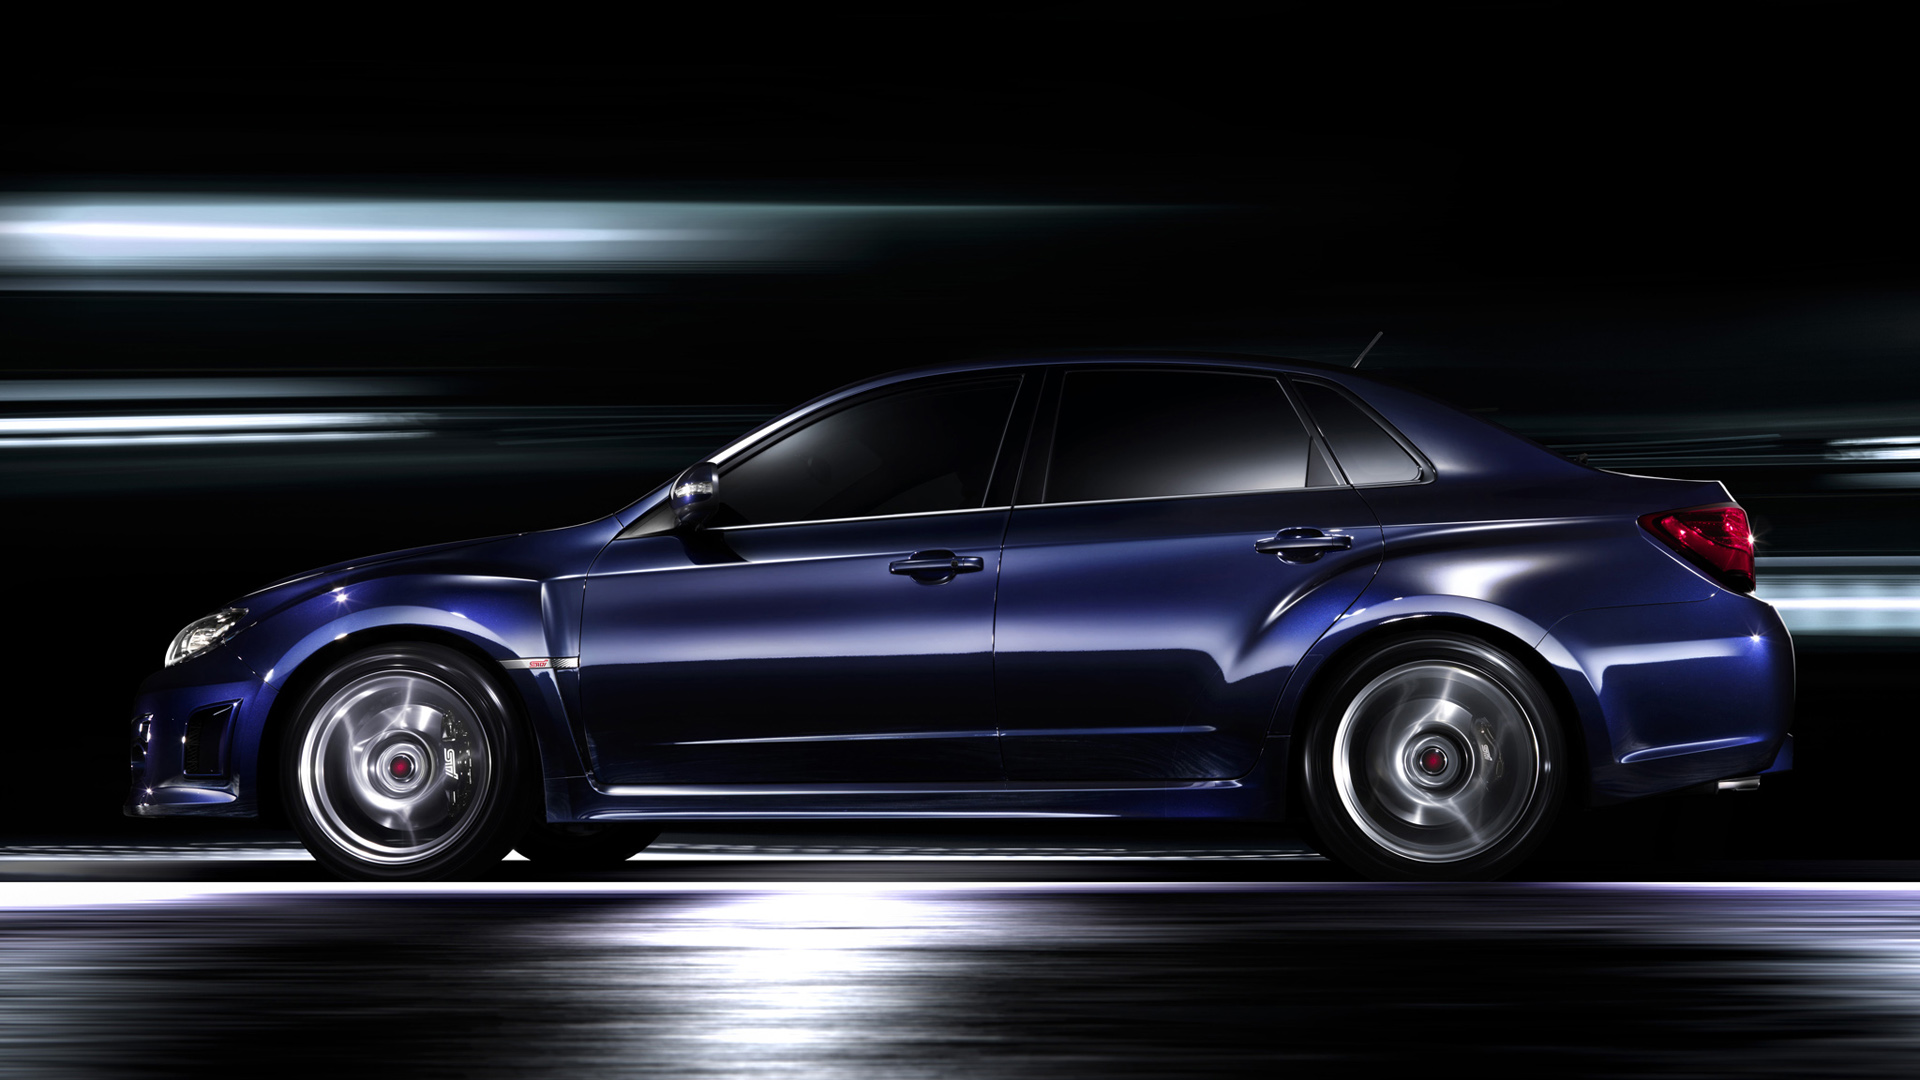  2010 Subaru Impreza WRX STI A-Line Wallpaper.